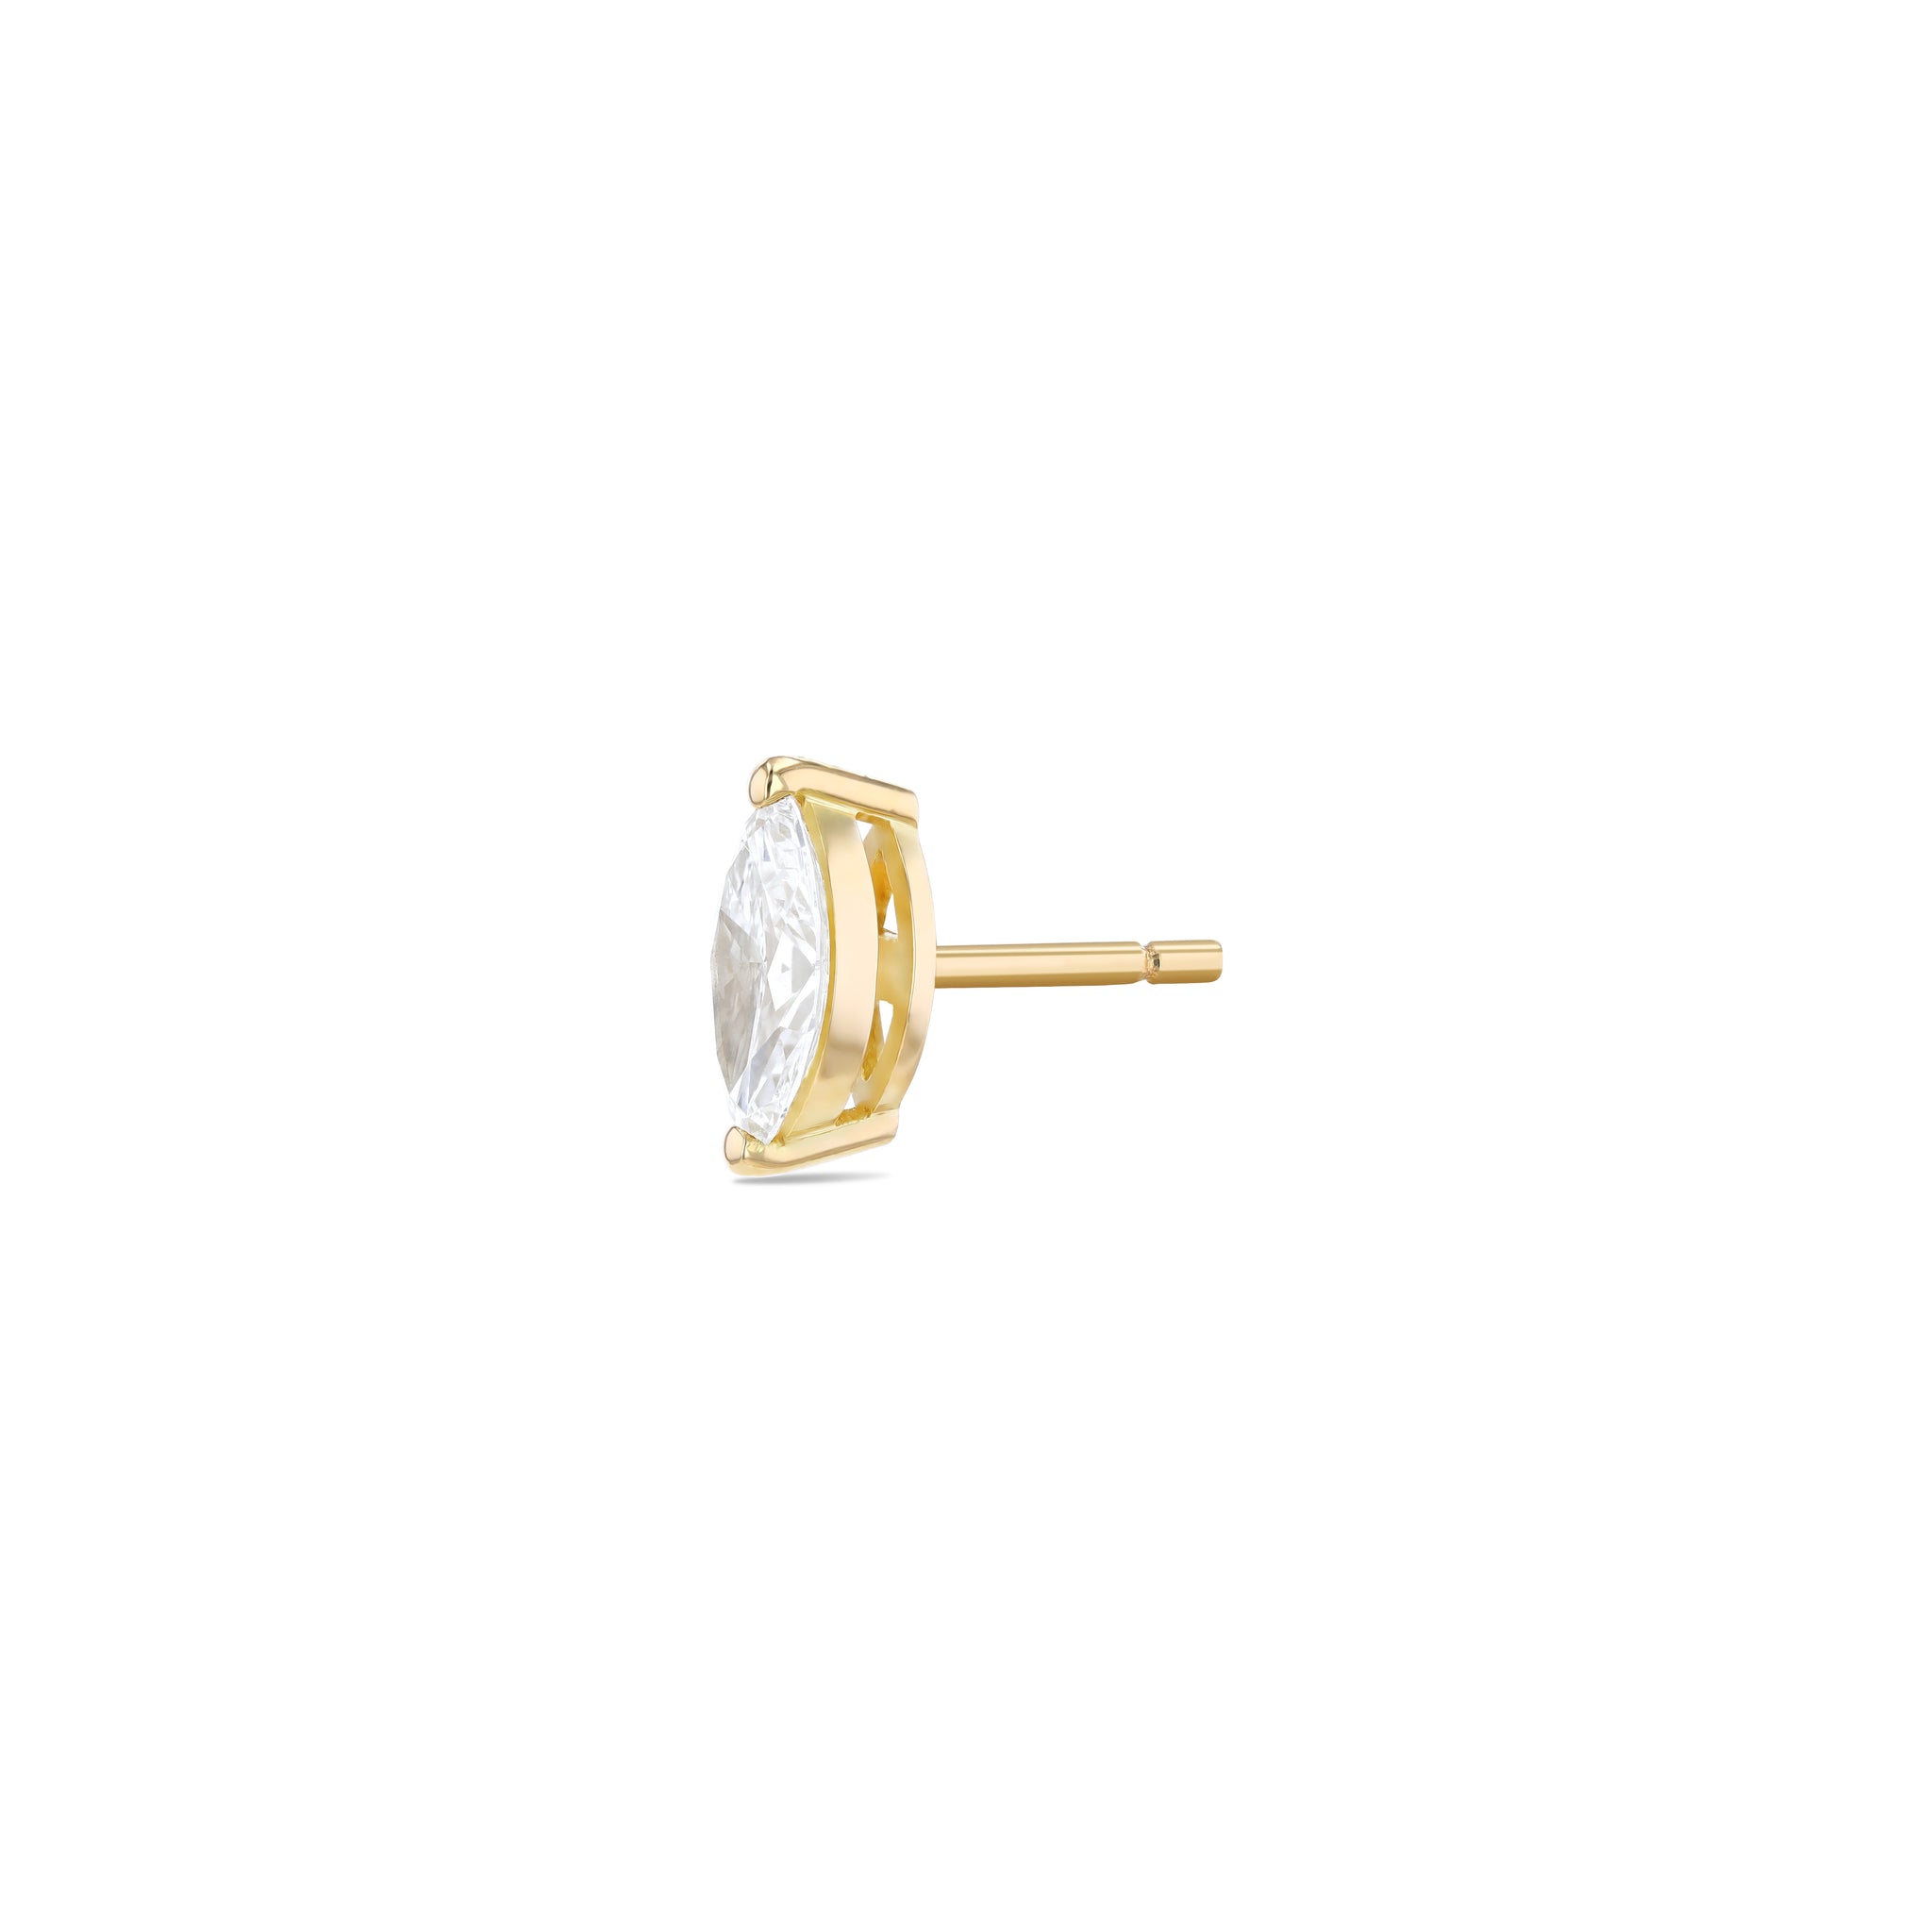 Marquise Diamond Stud Earrings - Lab Grown Diamonds - 18K Gold